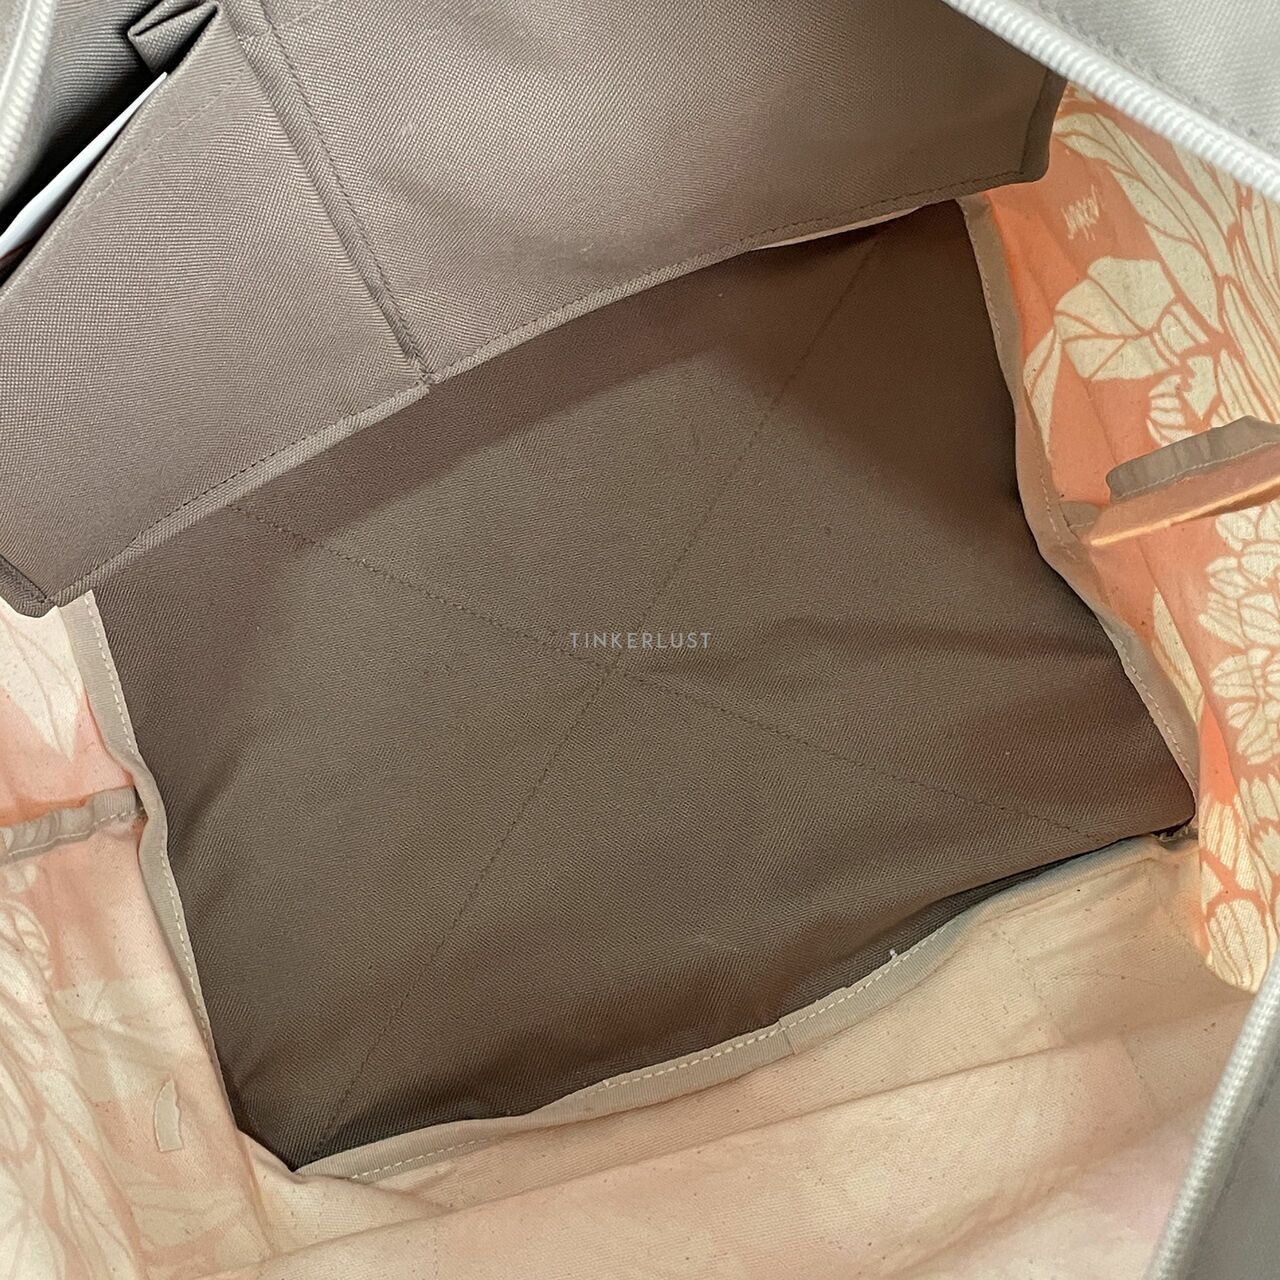 Tulisan Orange & Cream Floral Tote Bag